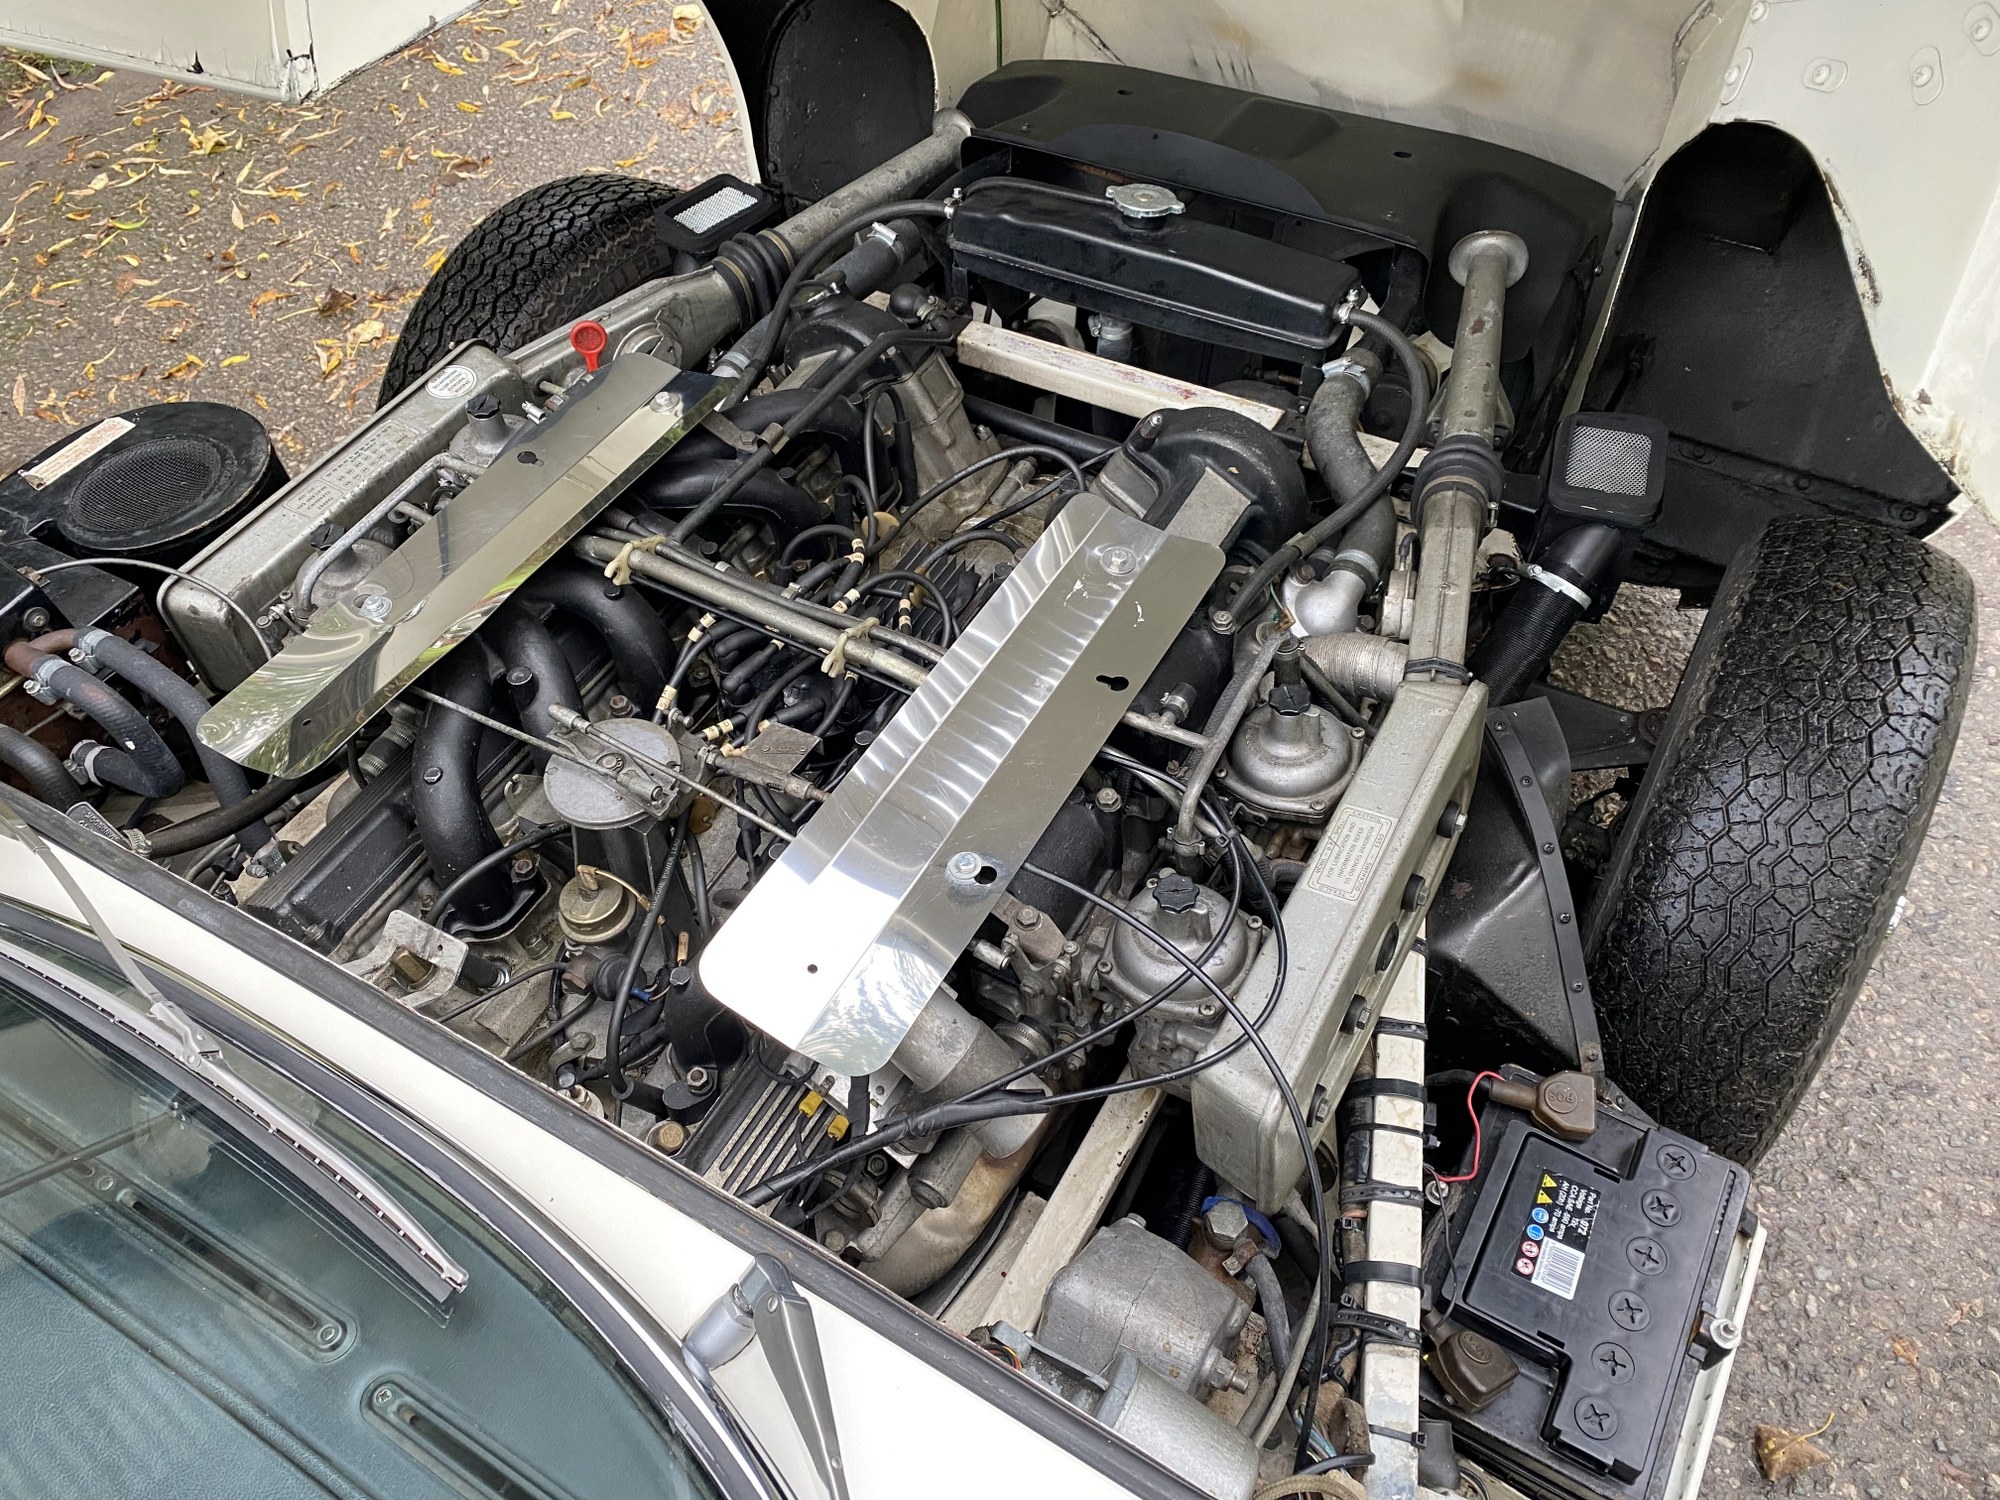 Jaguar E-Type V12 engine